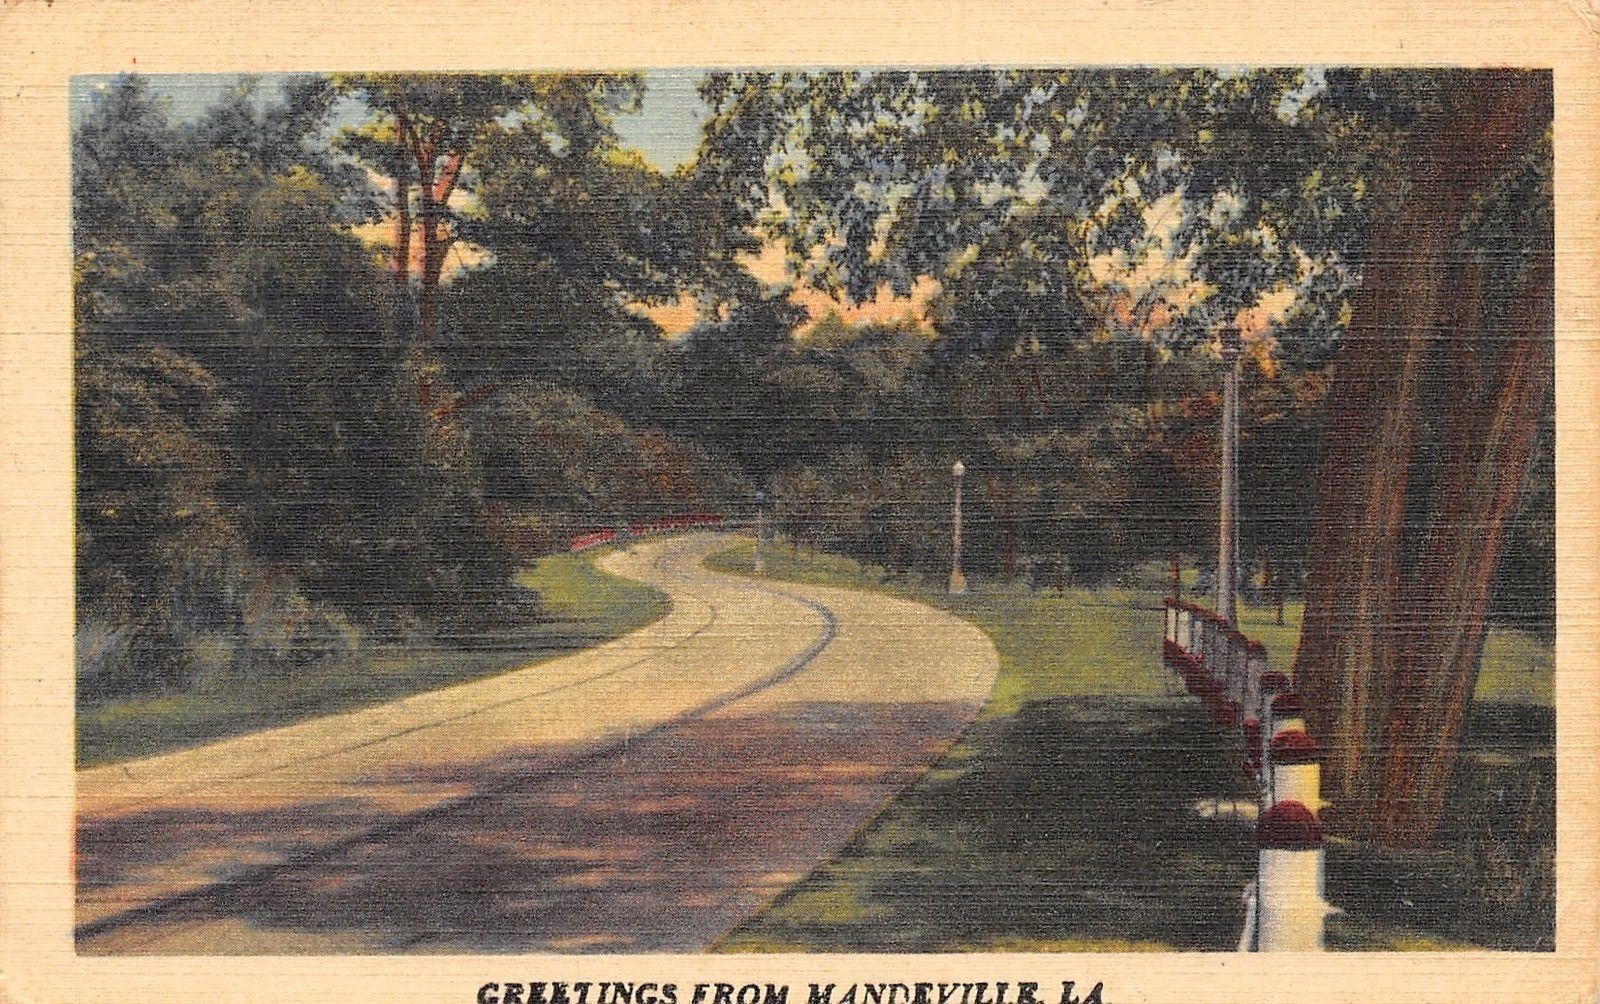 Mandeville Louisiana~Roadside Highway Greeting~1943 Postmark~Linen Postcard